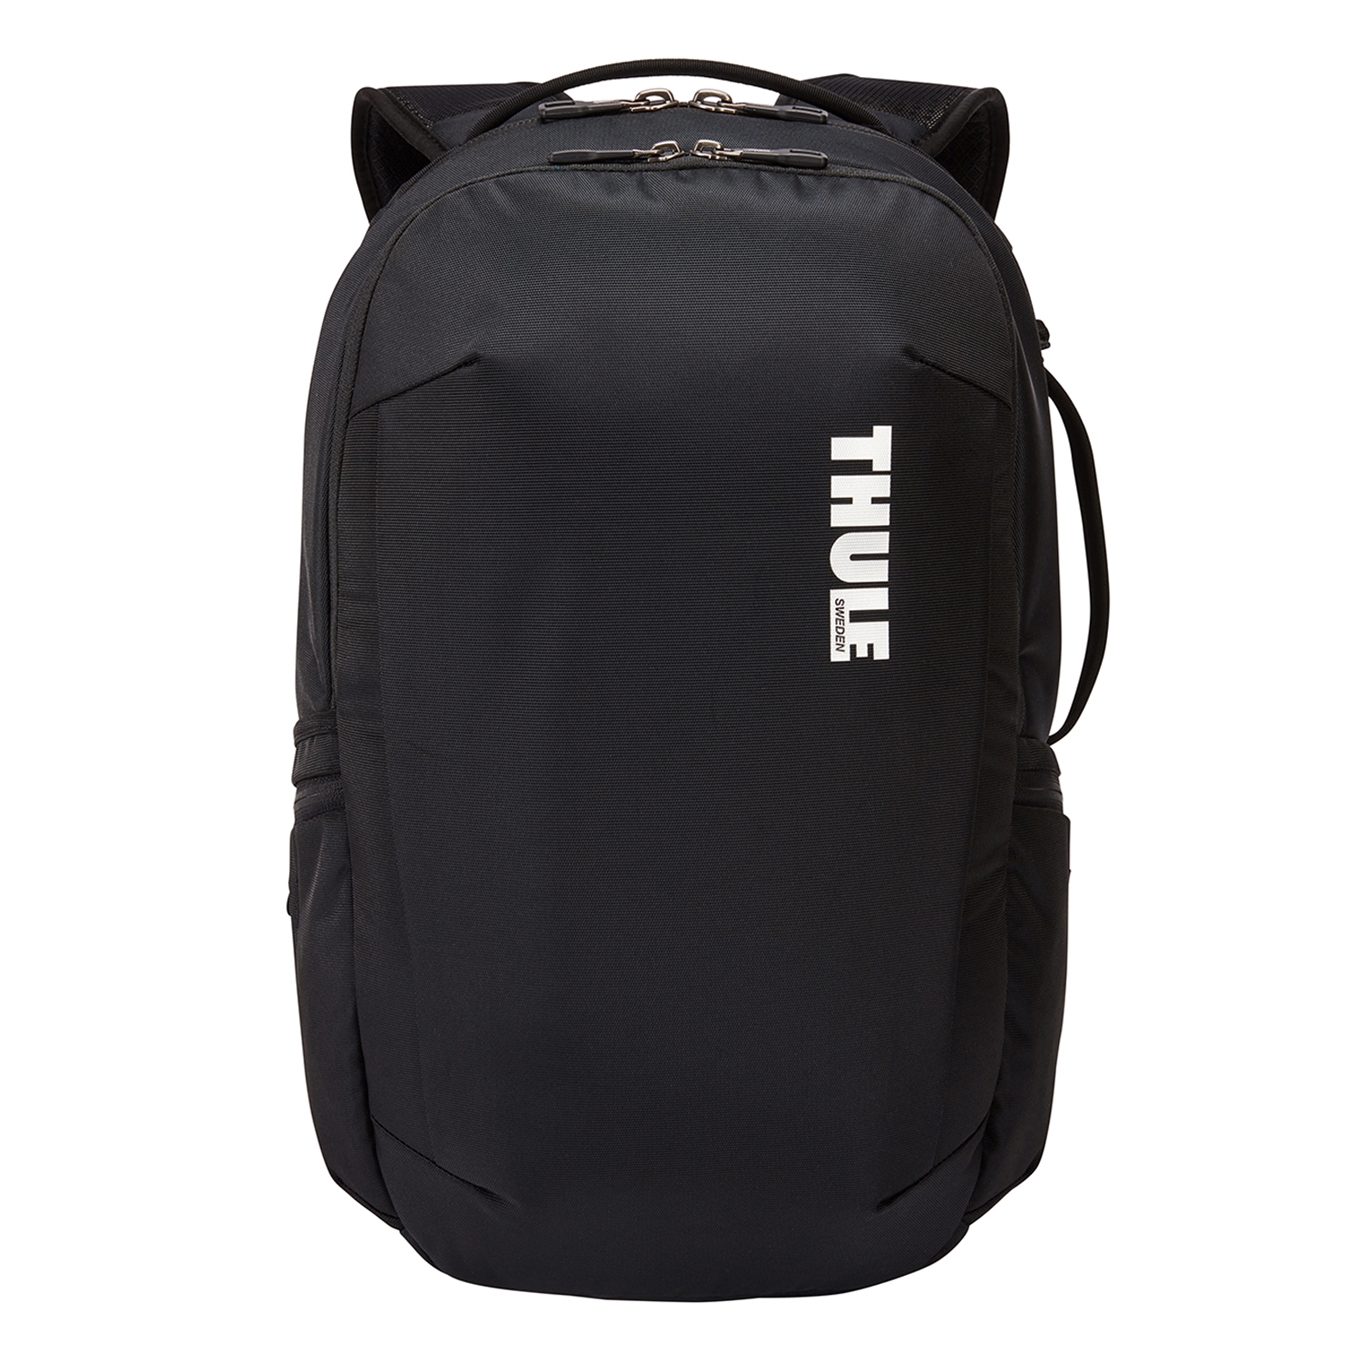 Thule Subterra Backpack 30L black backpack